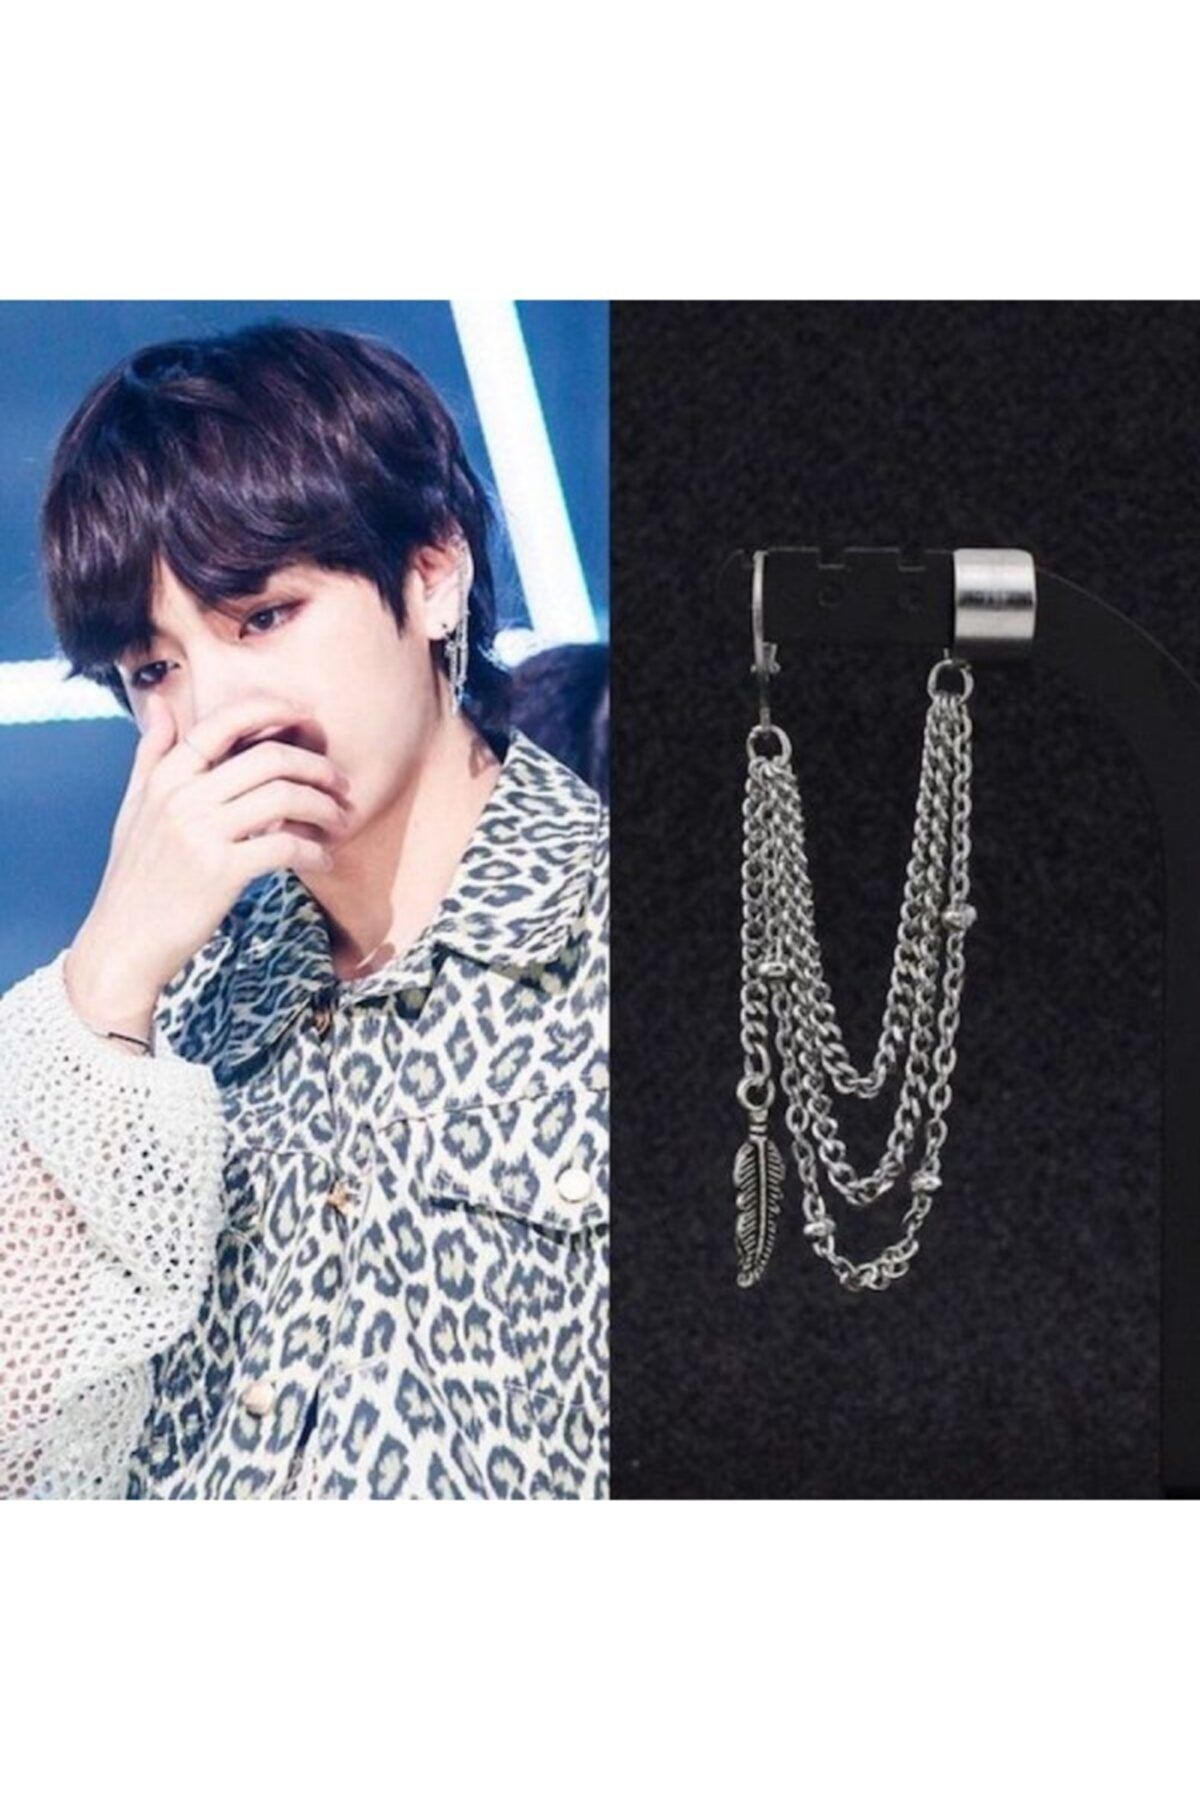 KPOP Idol BTS V Taehyung Blue Moon Star Earrings Korean Jewellery | eBay